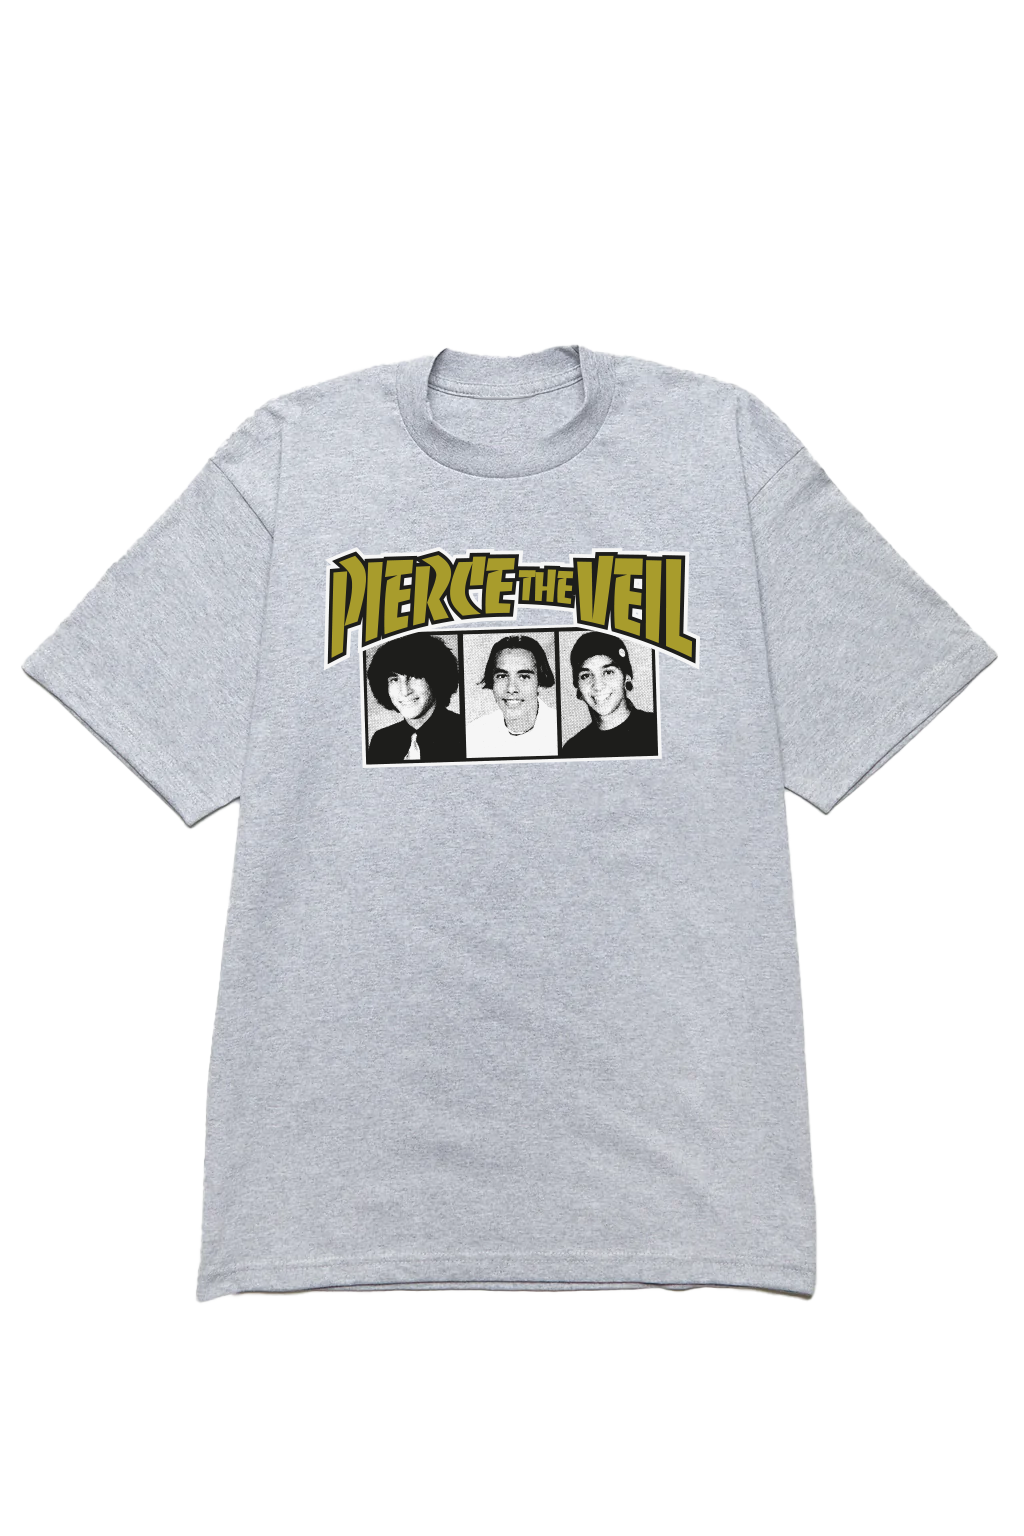 Pierce The Veil X KERRANG! T-shirt- Grey